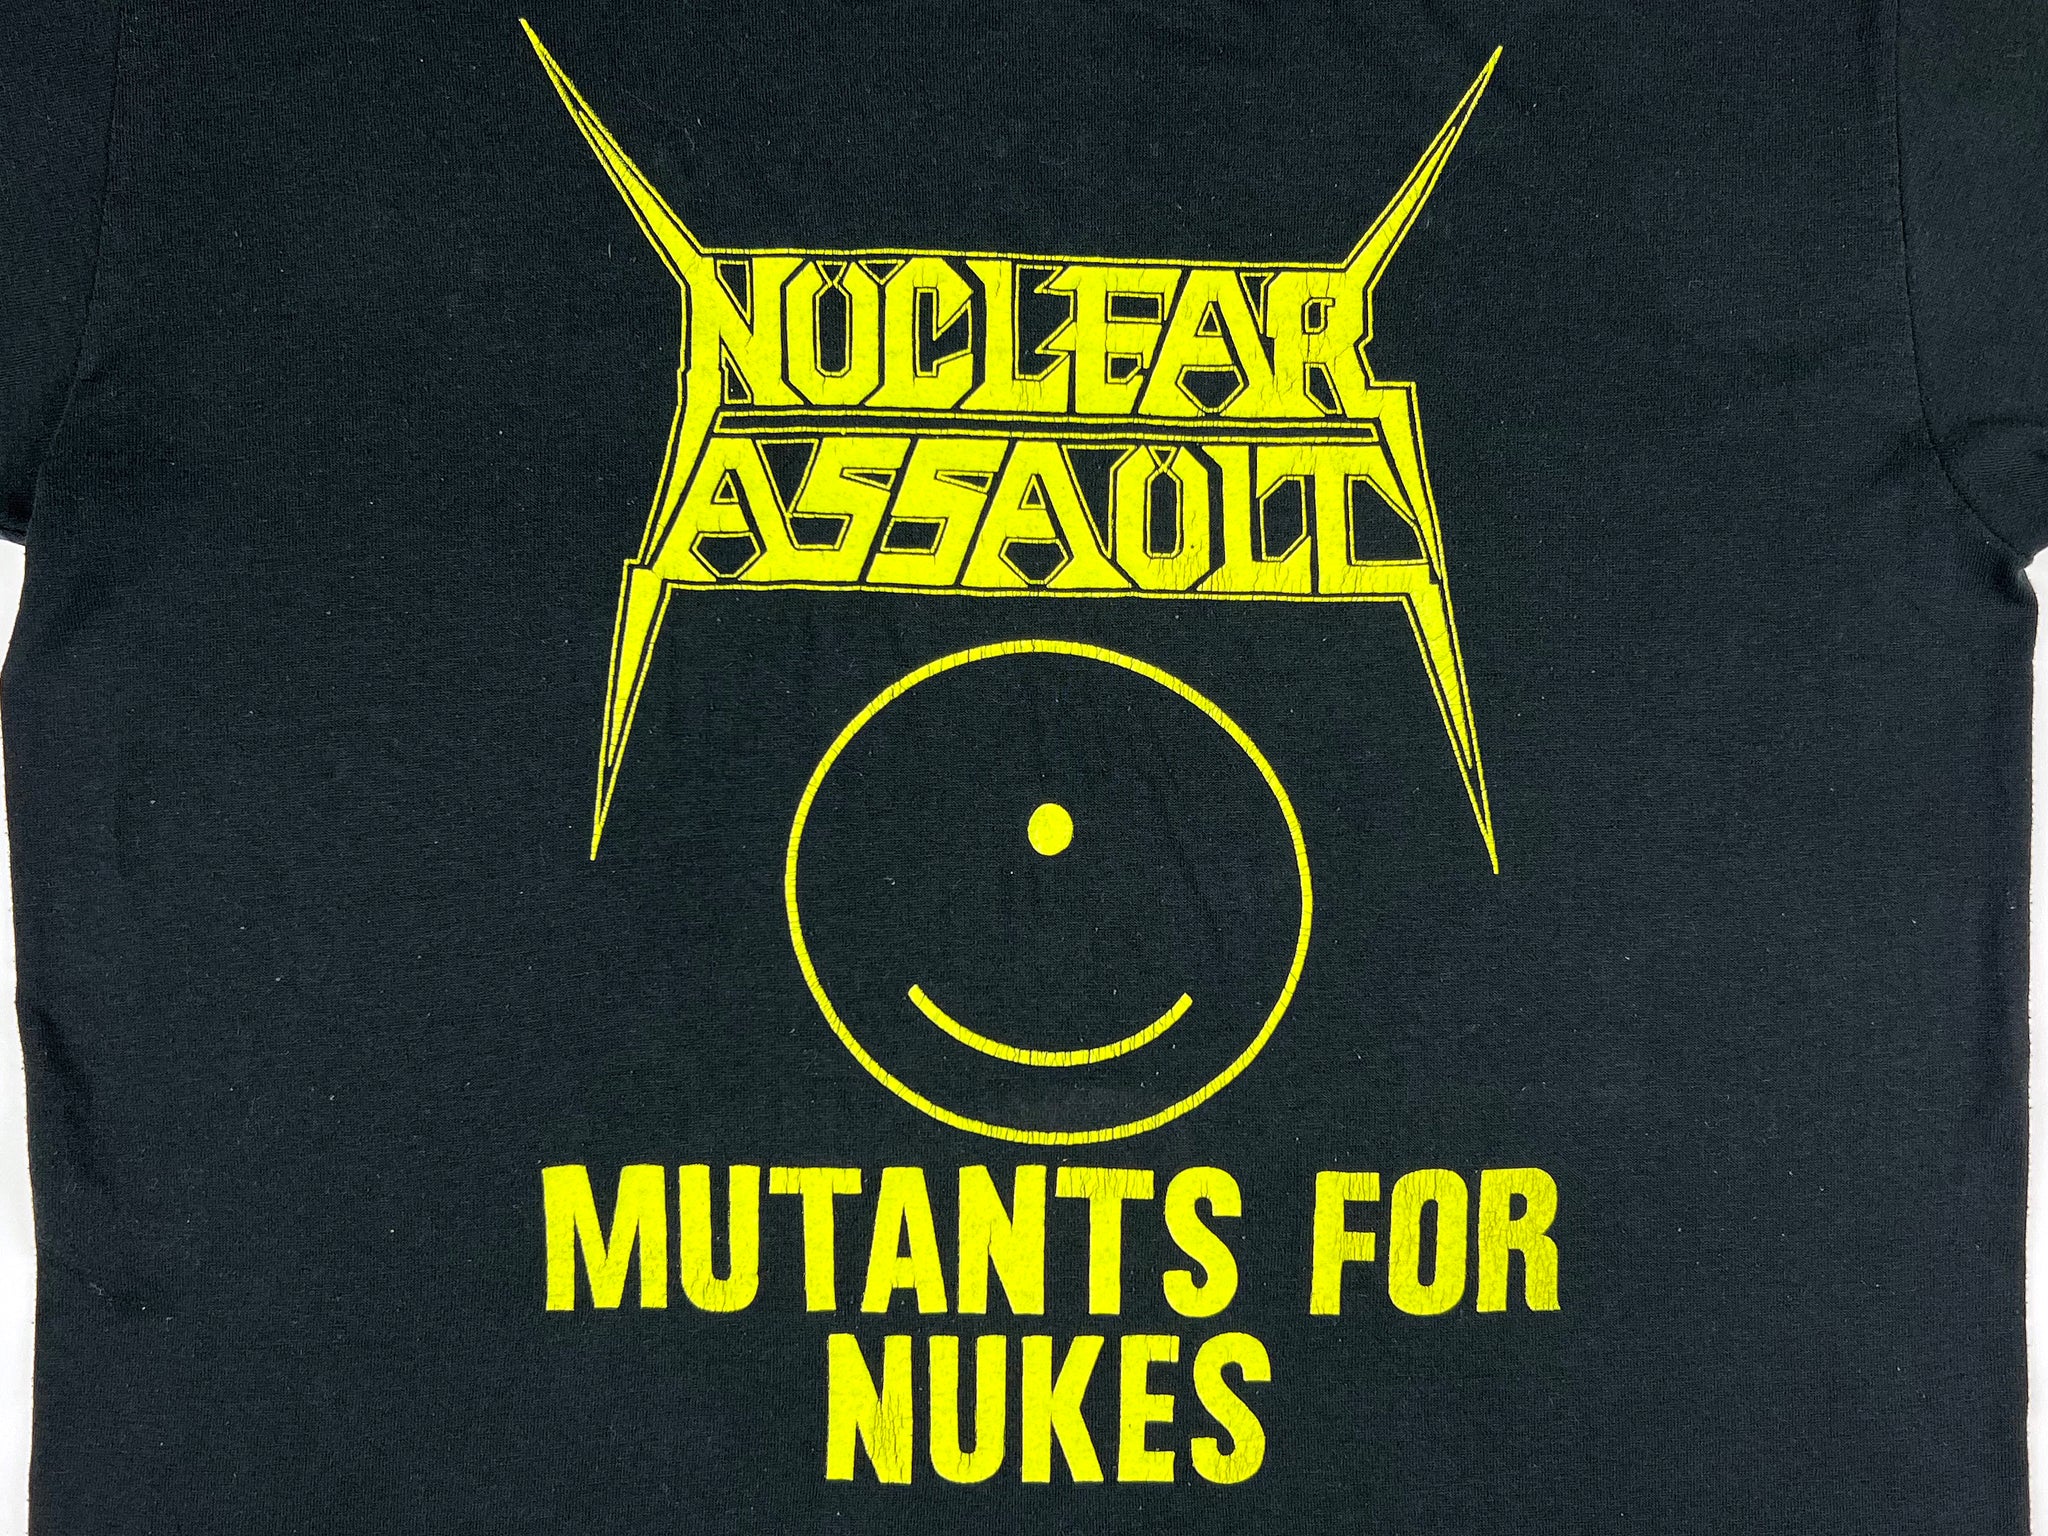 Nuclear Assault 'Mutants for Nukes' T-Shirt